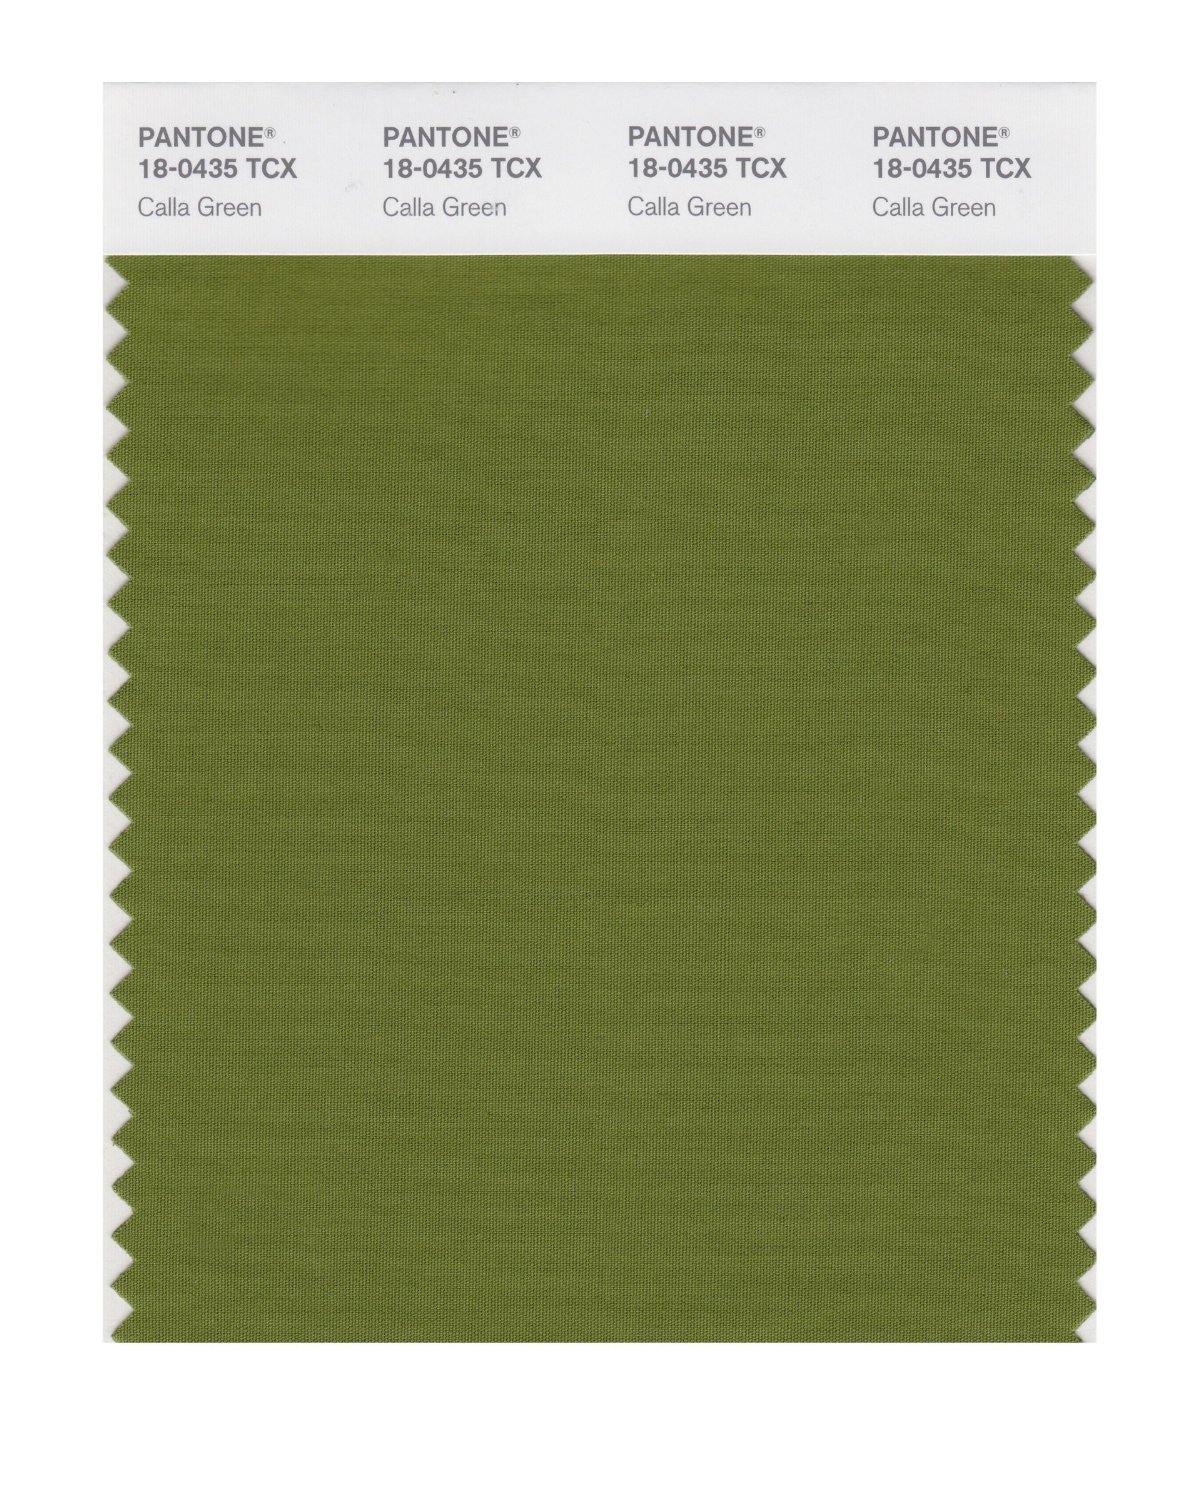 Pantone Cotton Swatch 18-0435 Calla Green